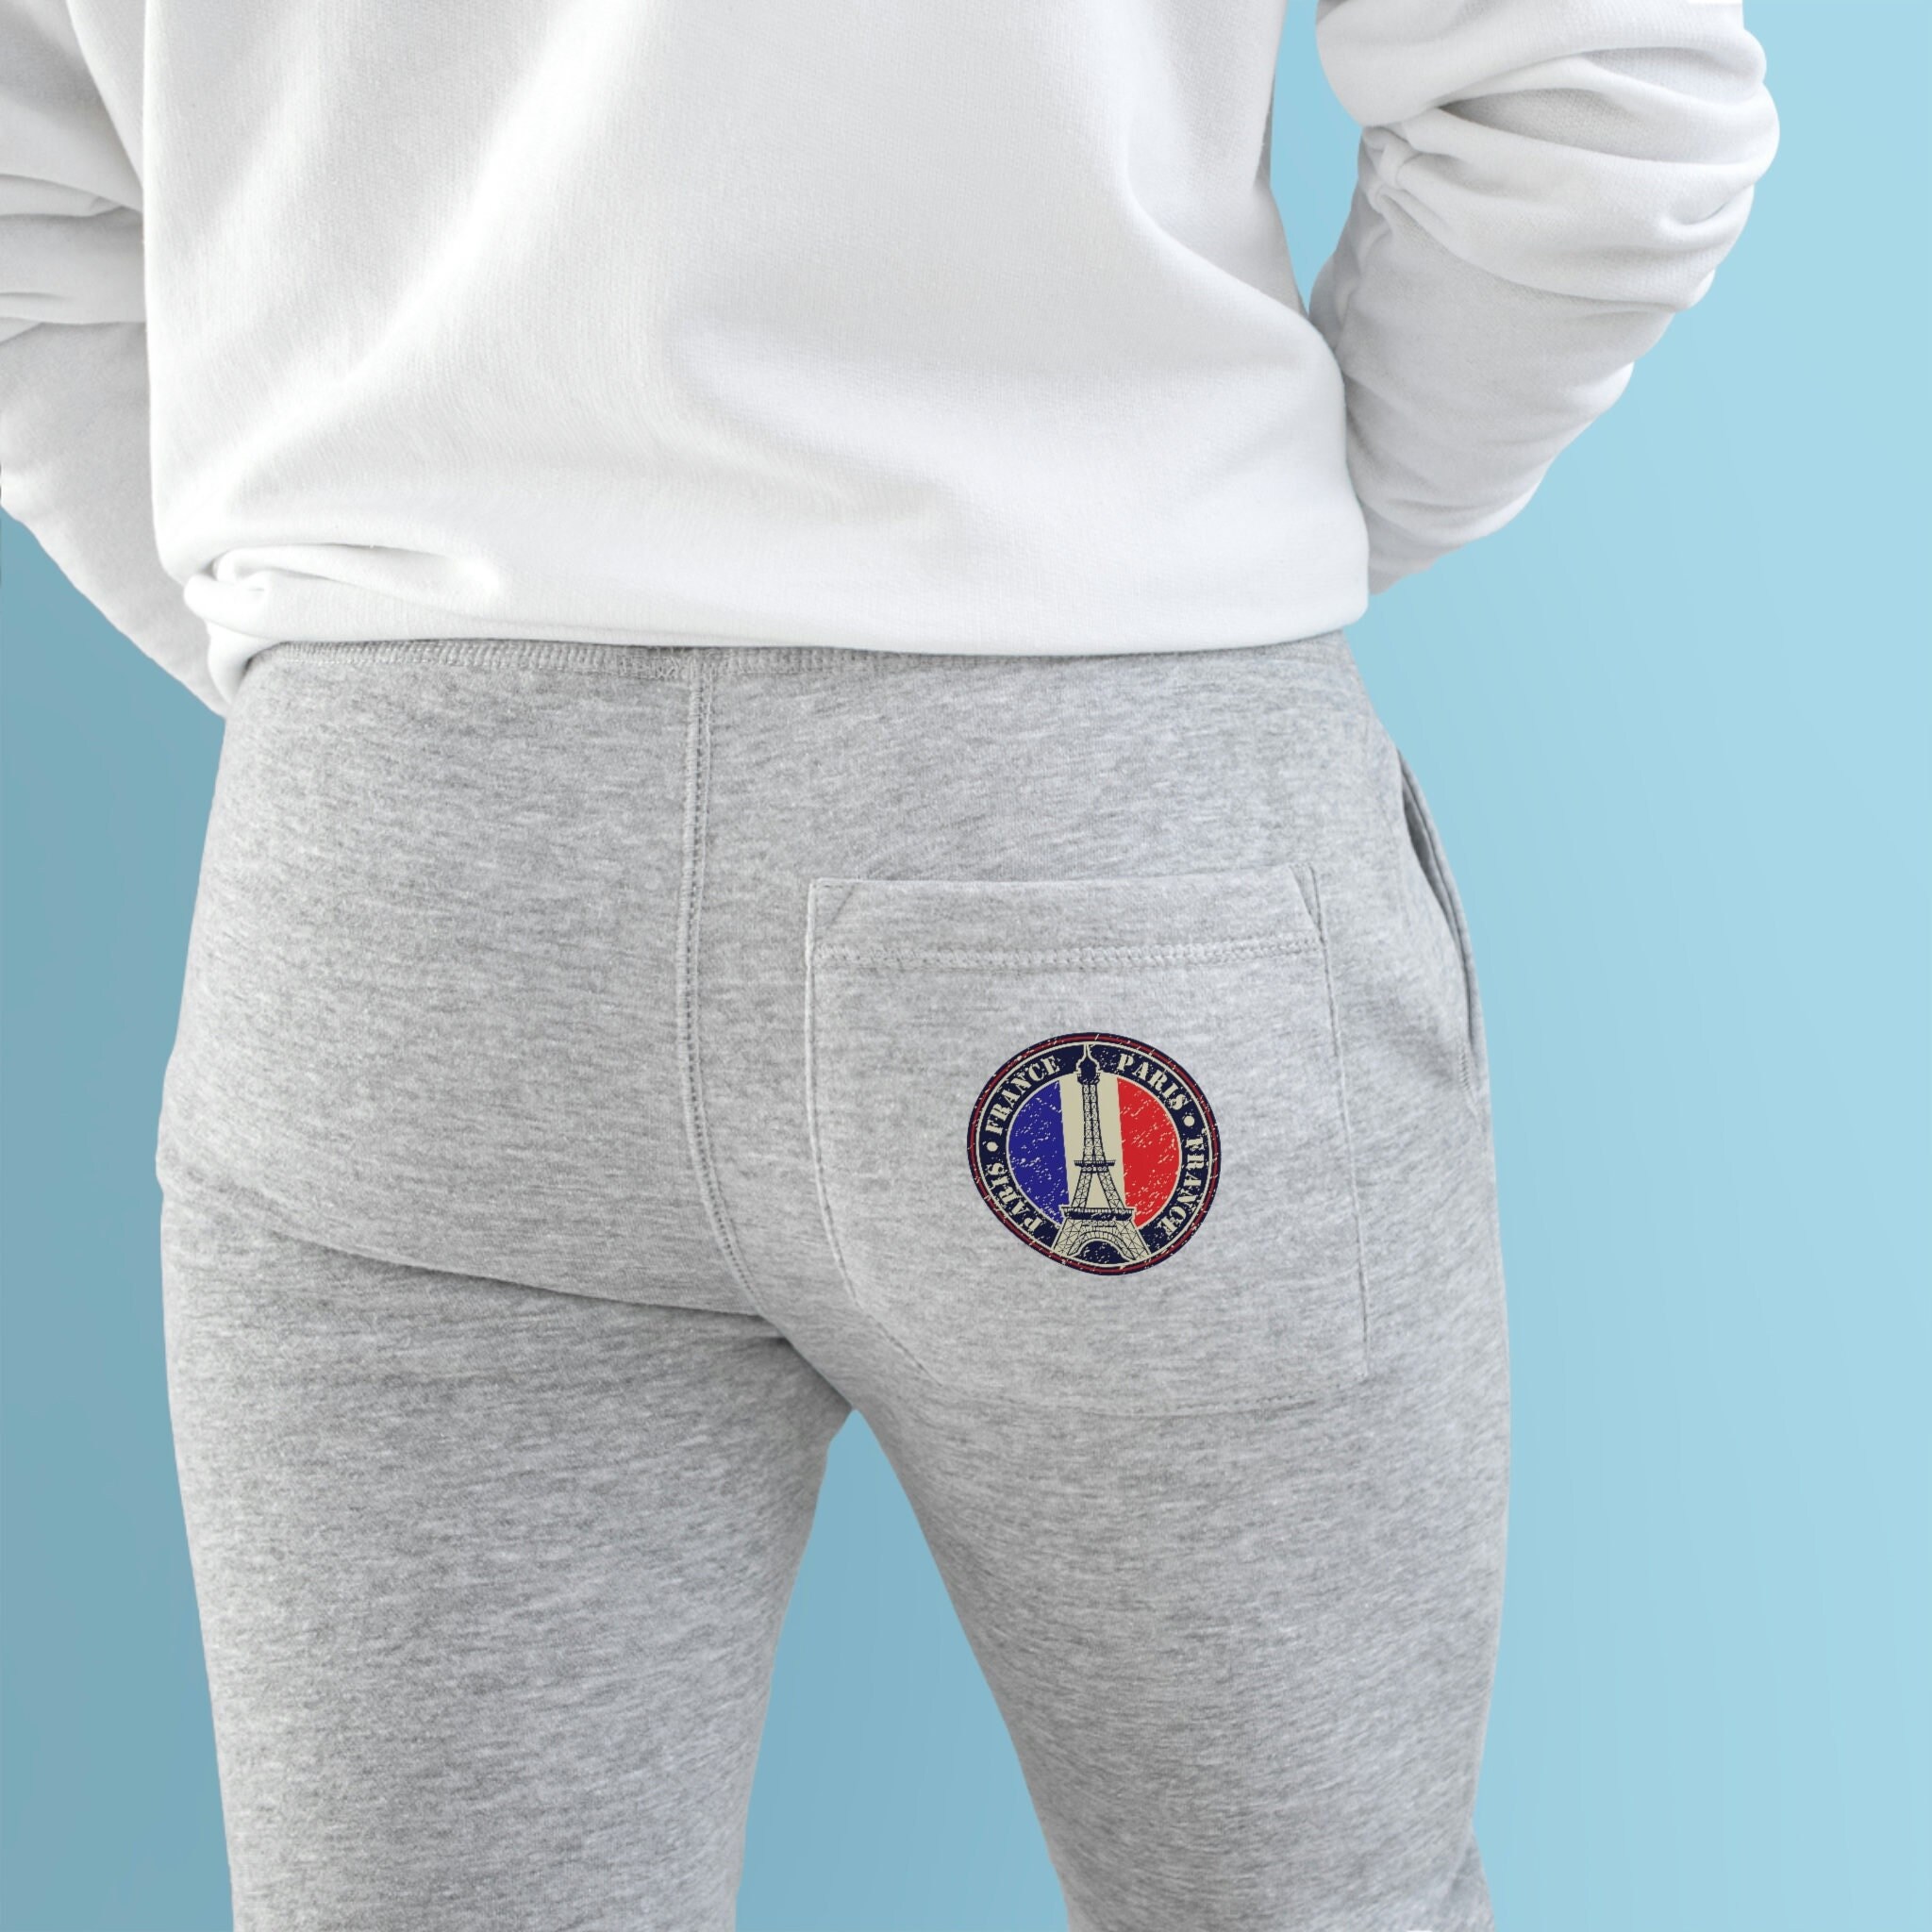 Made in France Logo Joggers for Men Fleece Comfortable Gym - Etsy